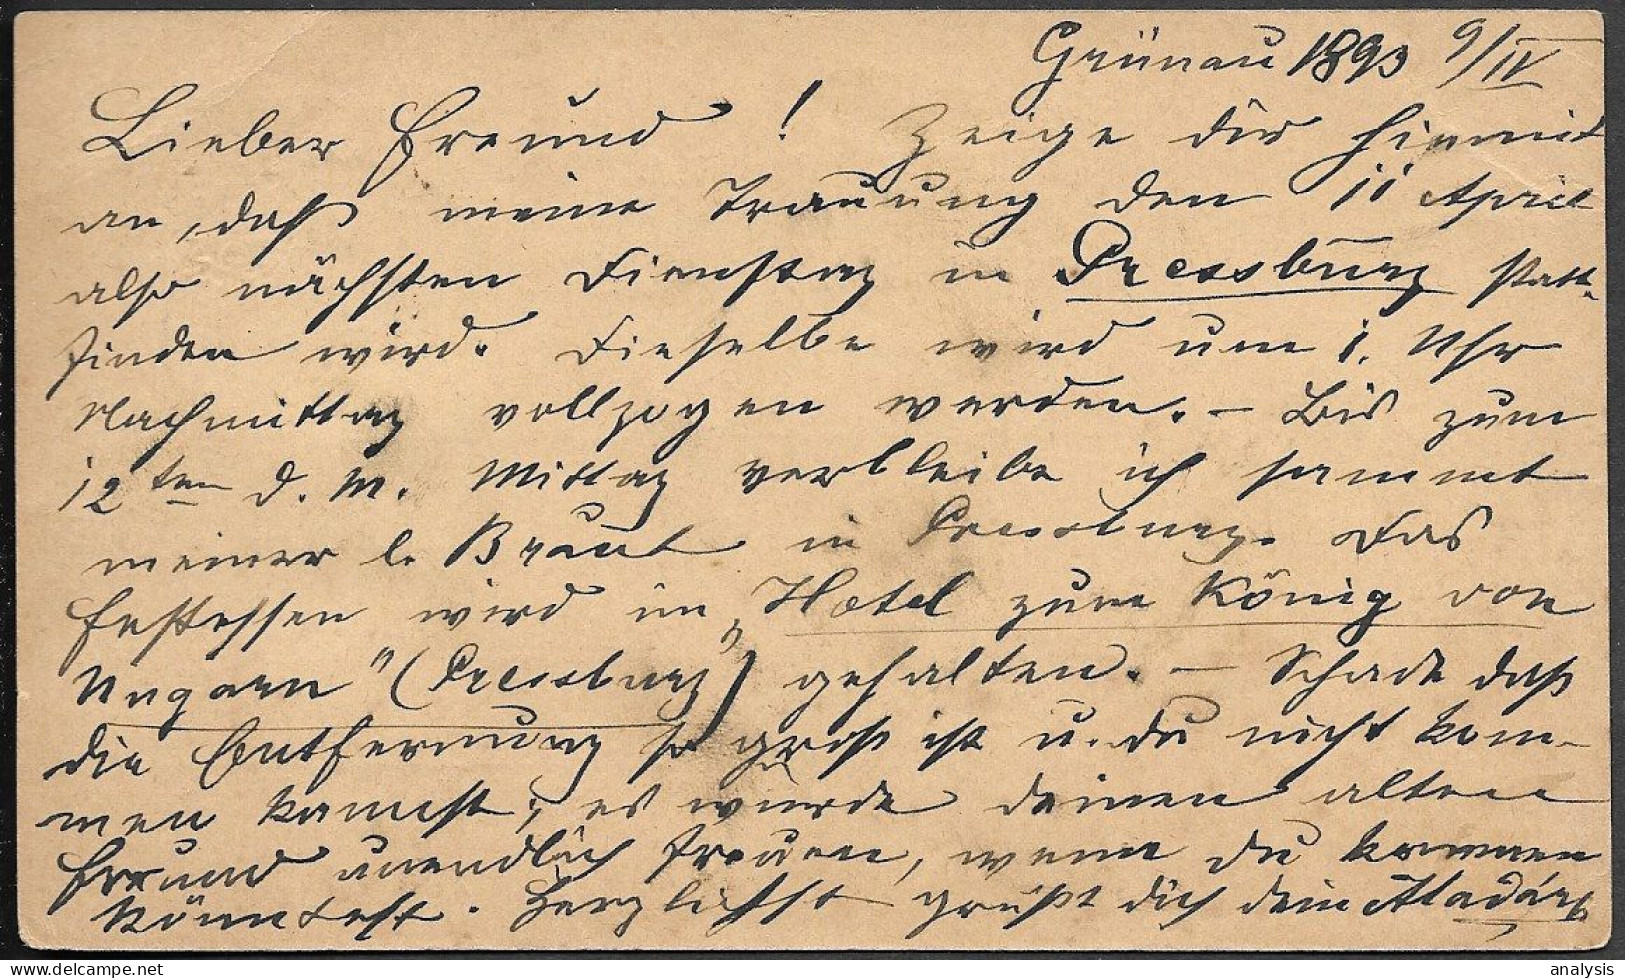 Hungary Slovakia Bazin Postal Stationery Card Mailed To Germany 1893 - Covers & Documents